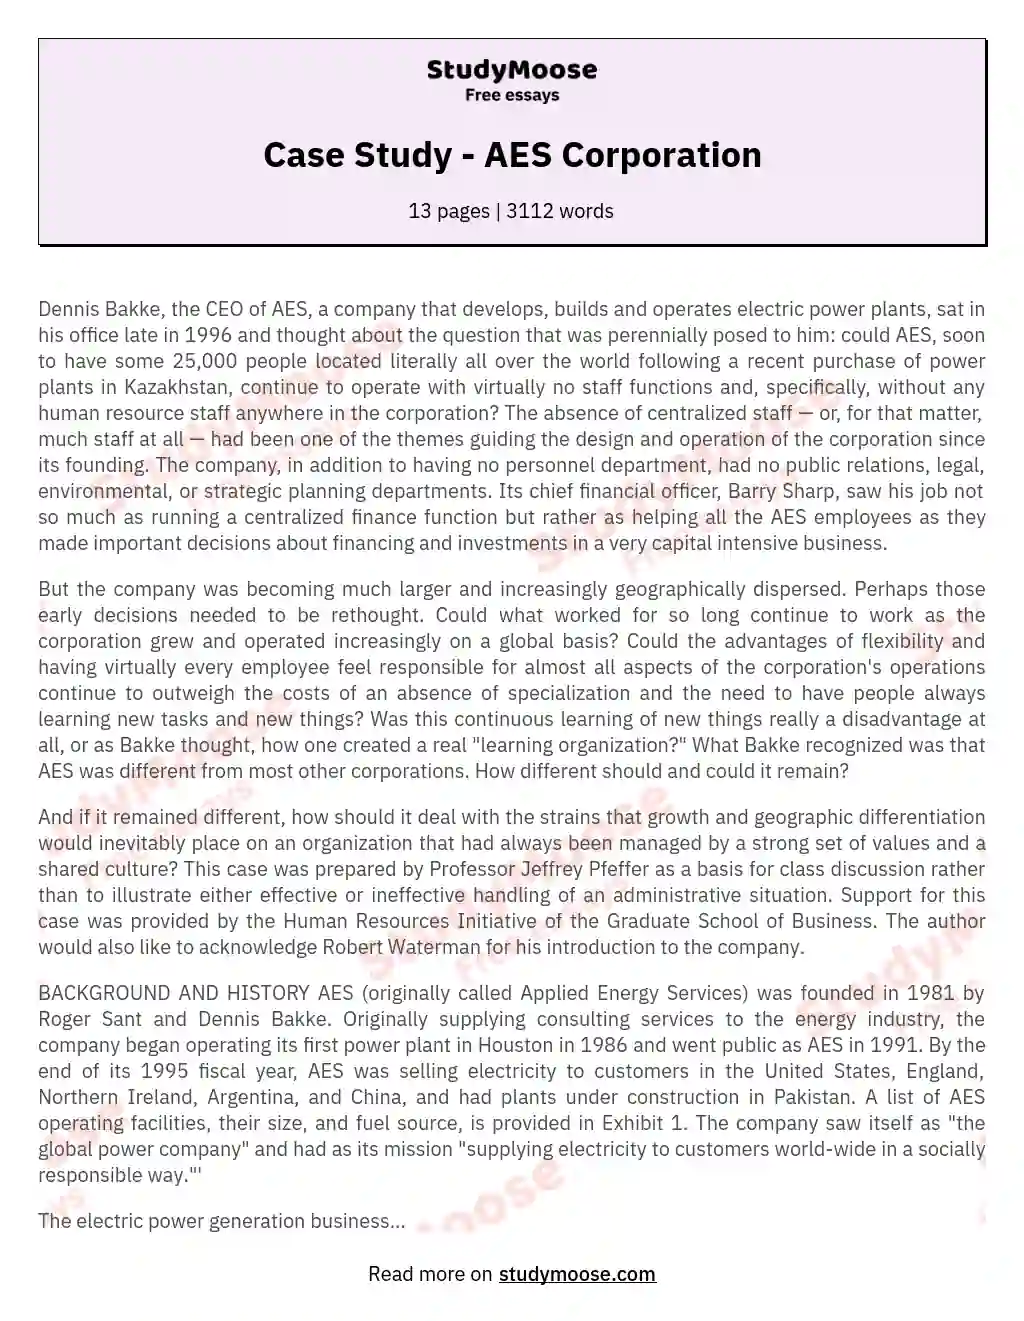 Case Study - AES Corporation essay